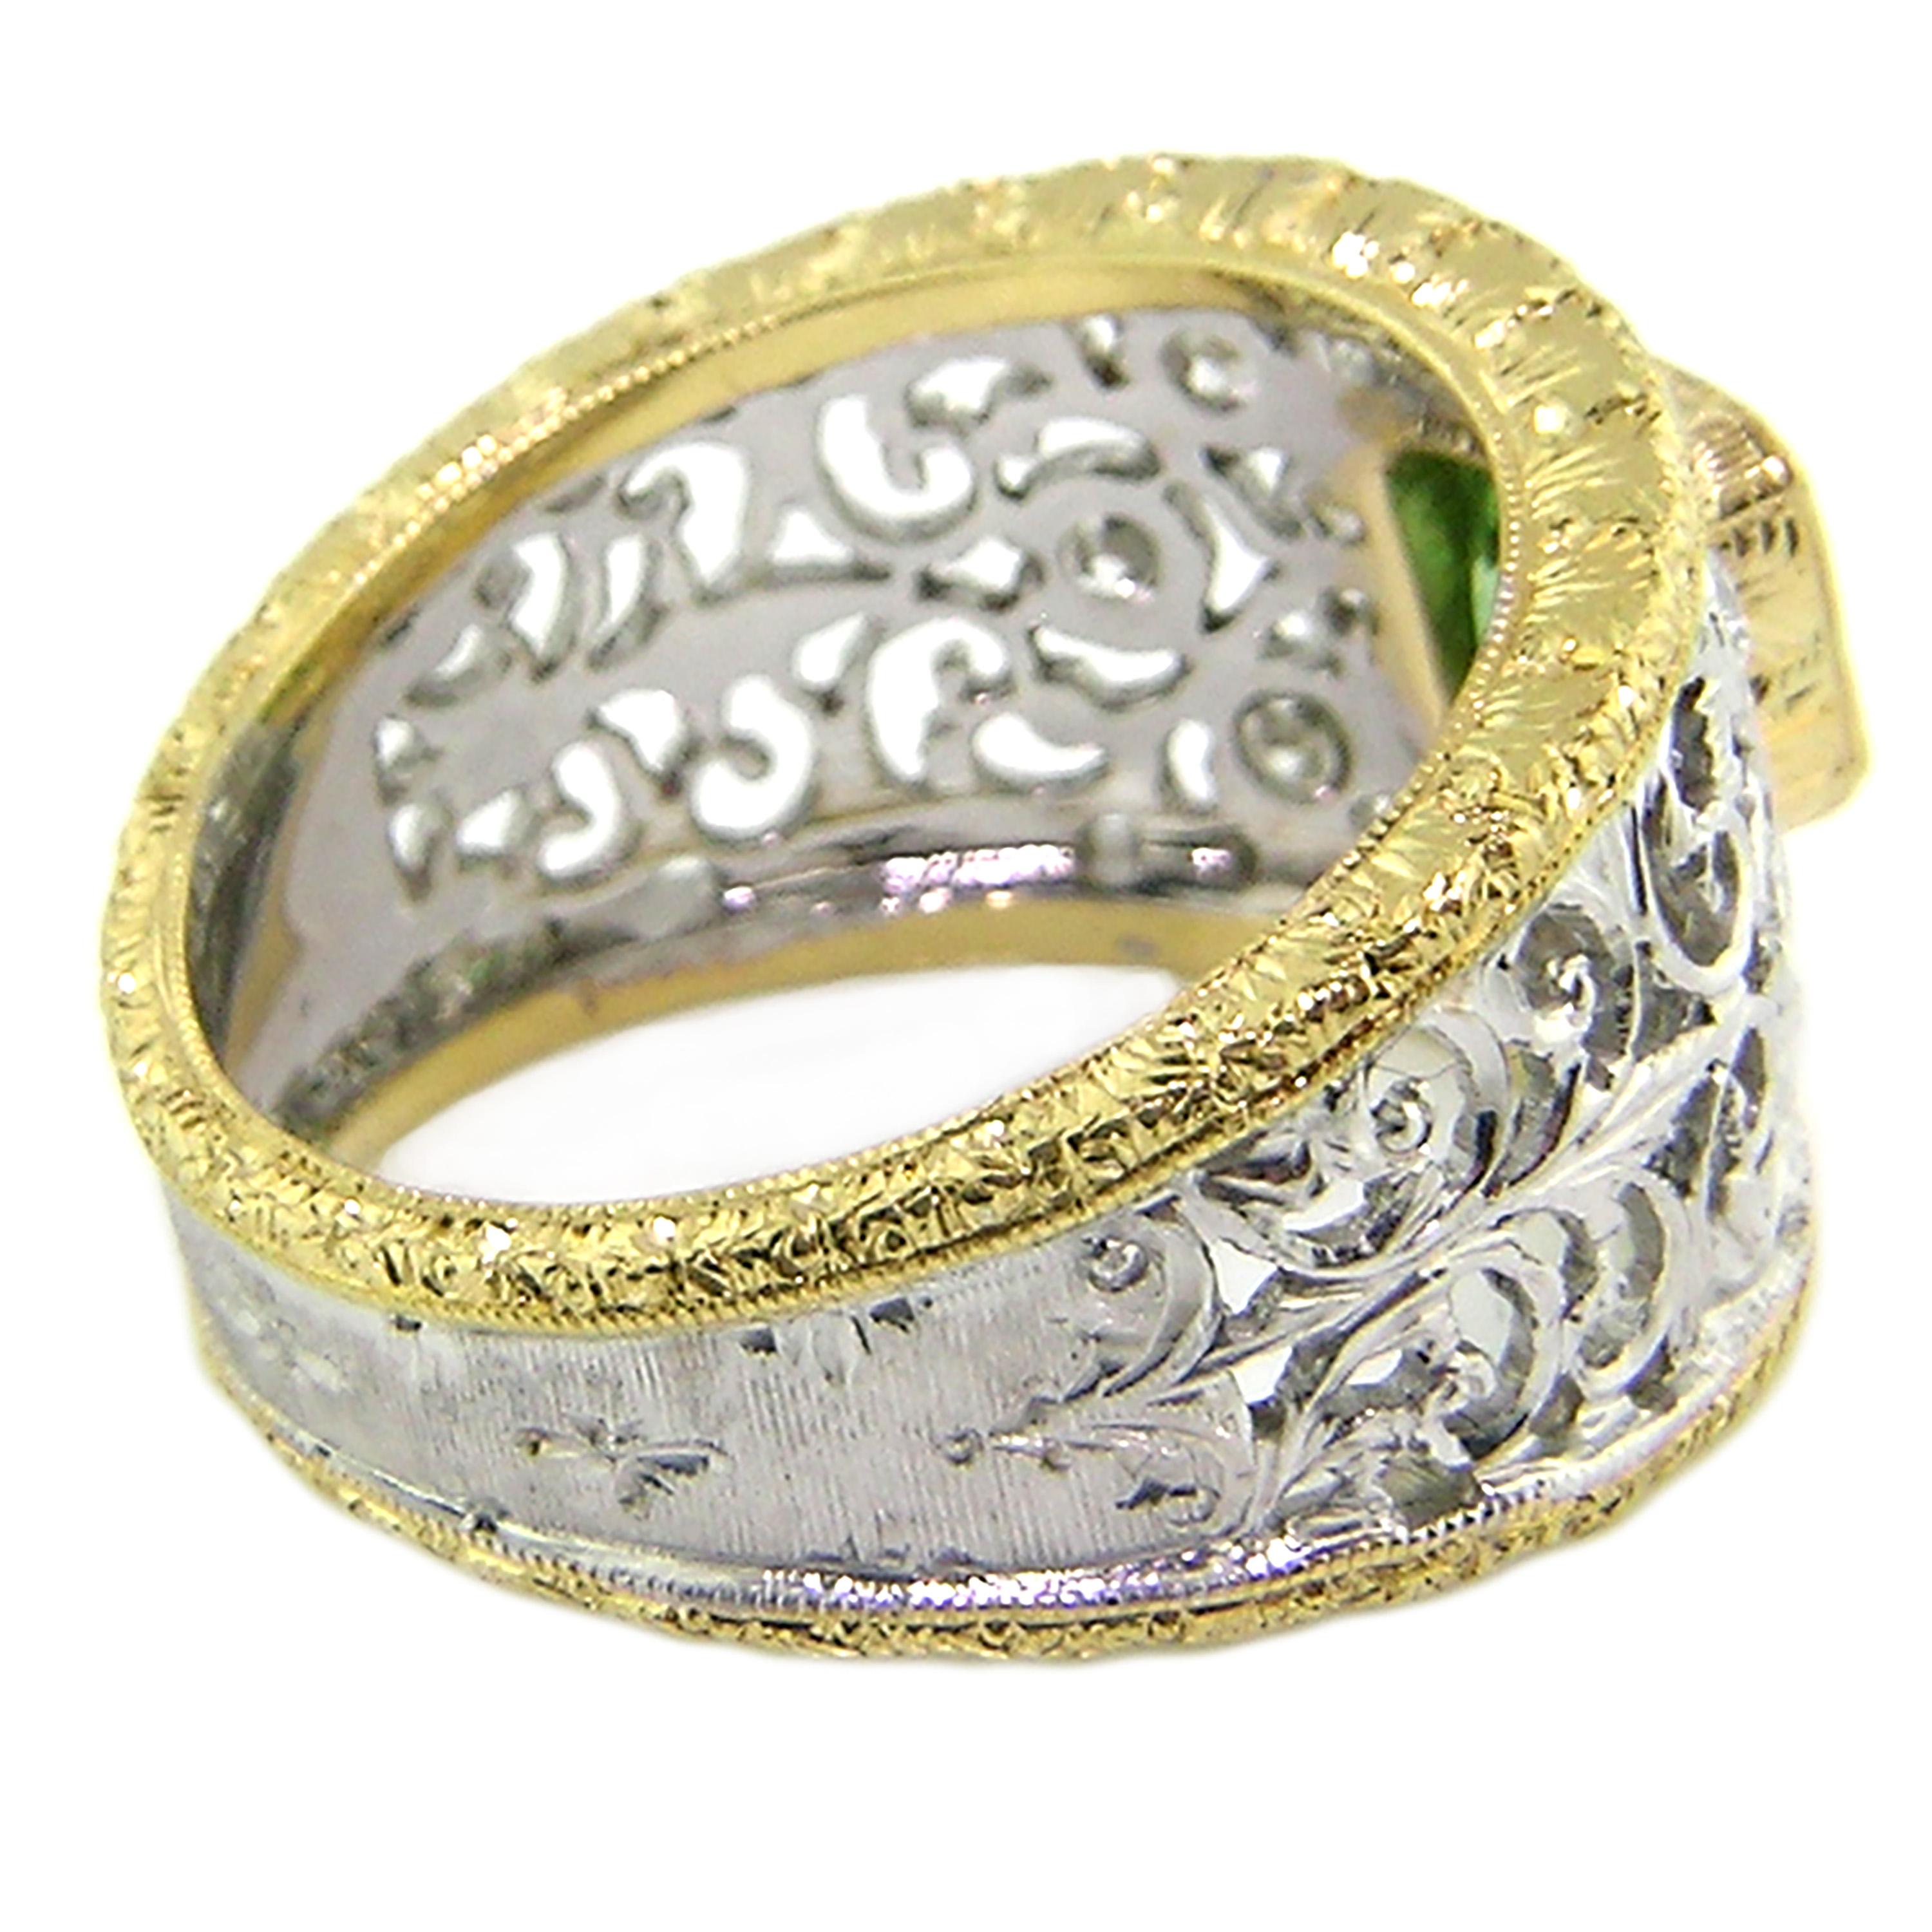 Artisan Green Tourmaline and Diamond 18kt Hand Engraved Ring, Handmade in Italy